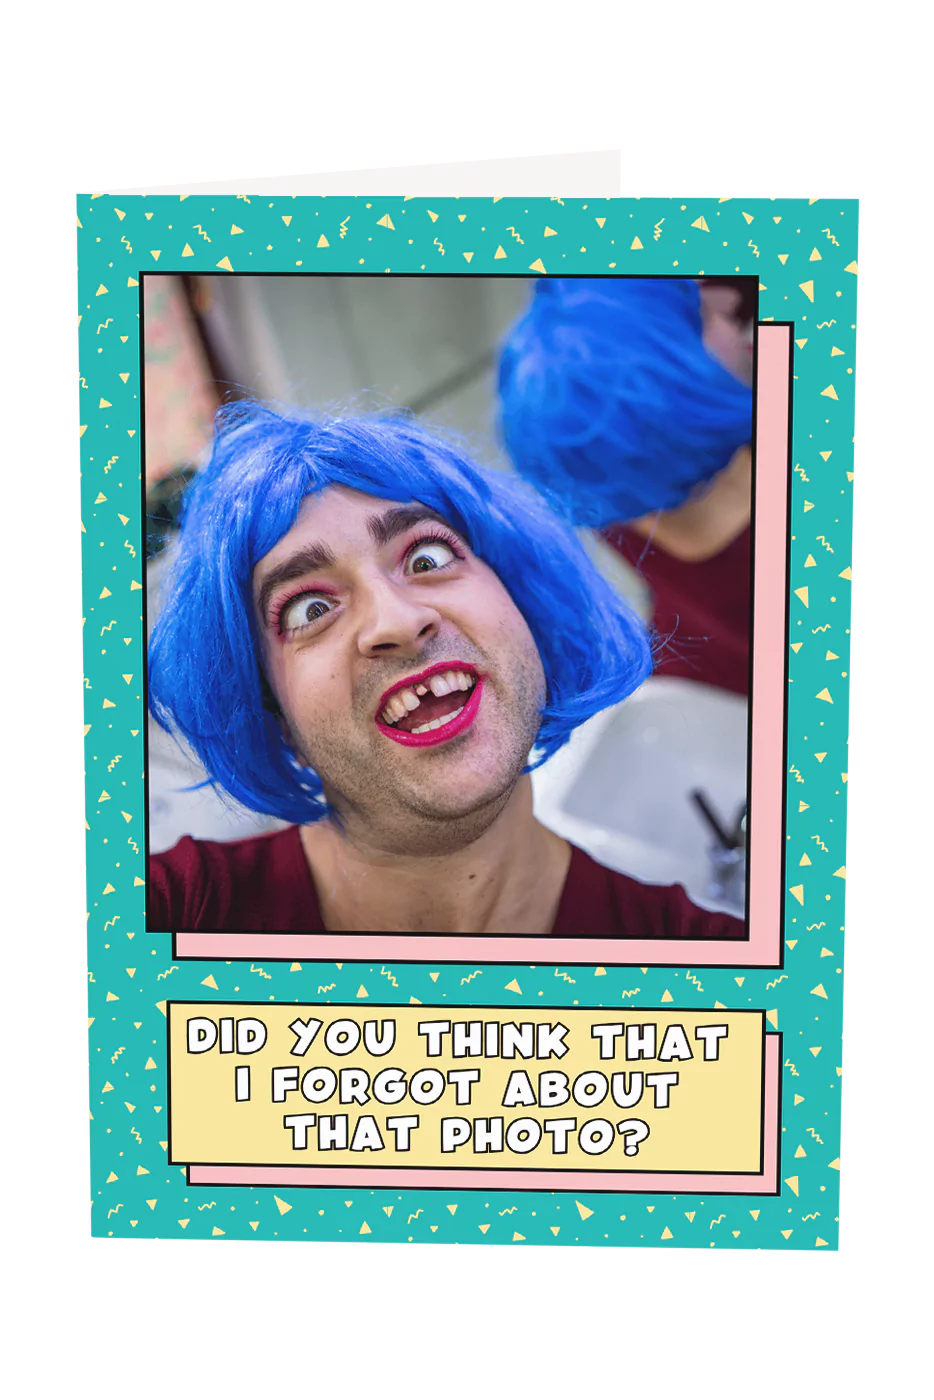 Embarrassing Custom Photo Upload Greeting Card